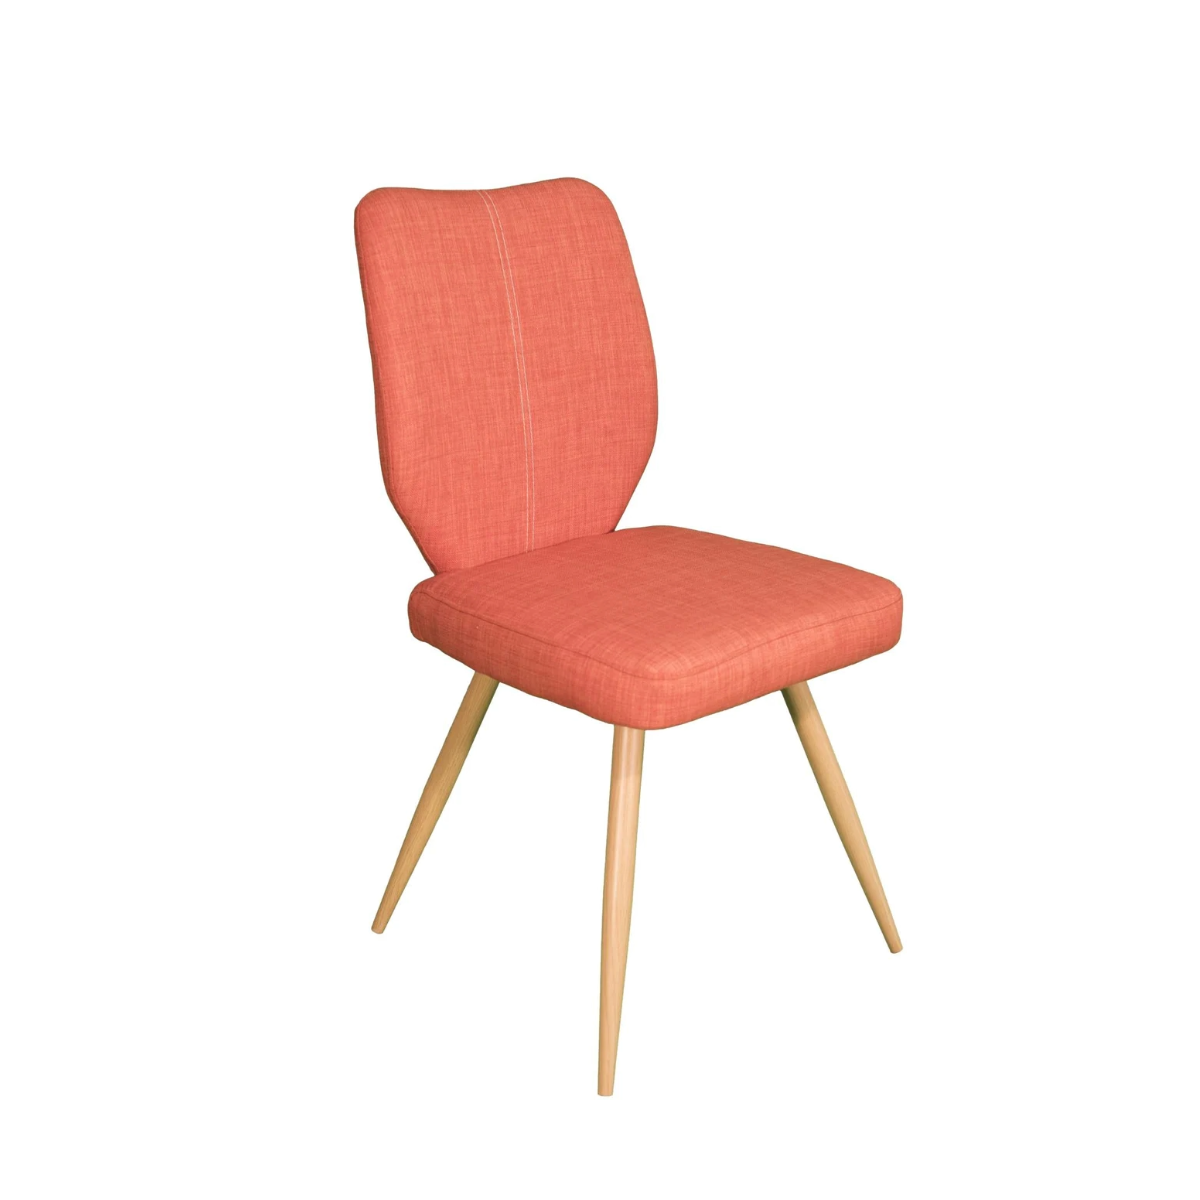 Malmo Dining Chair Orange.